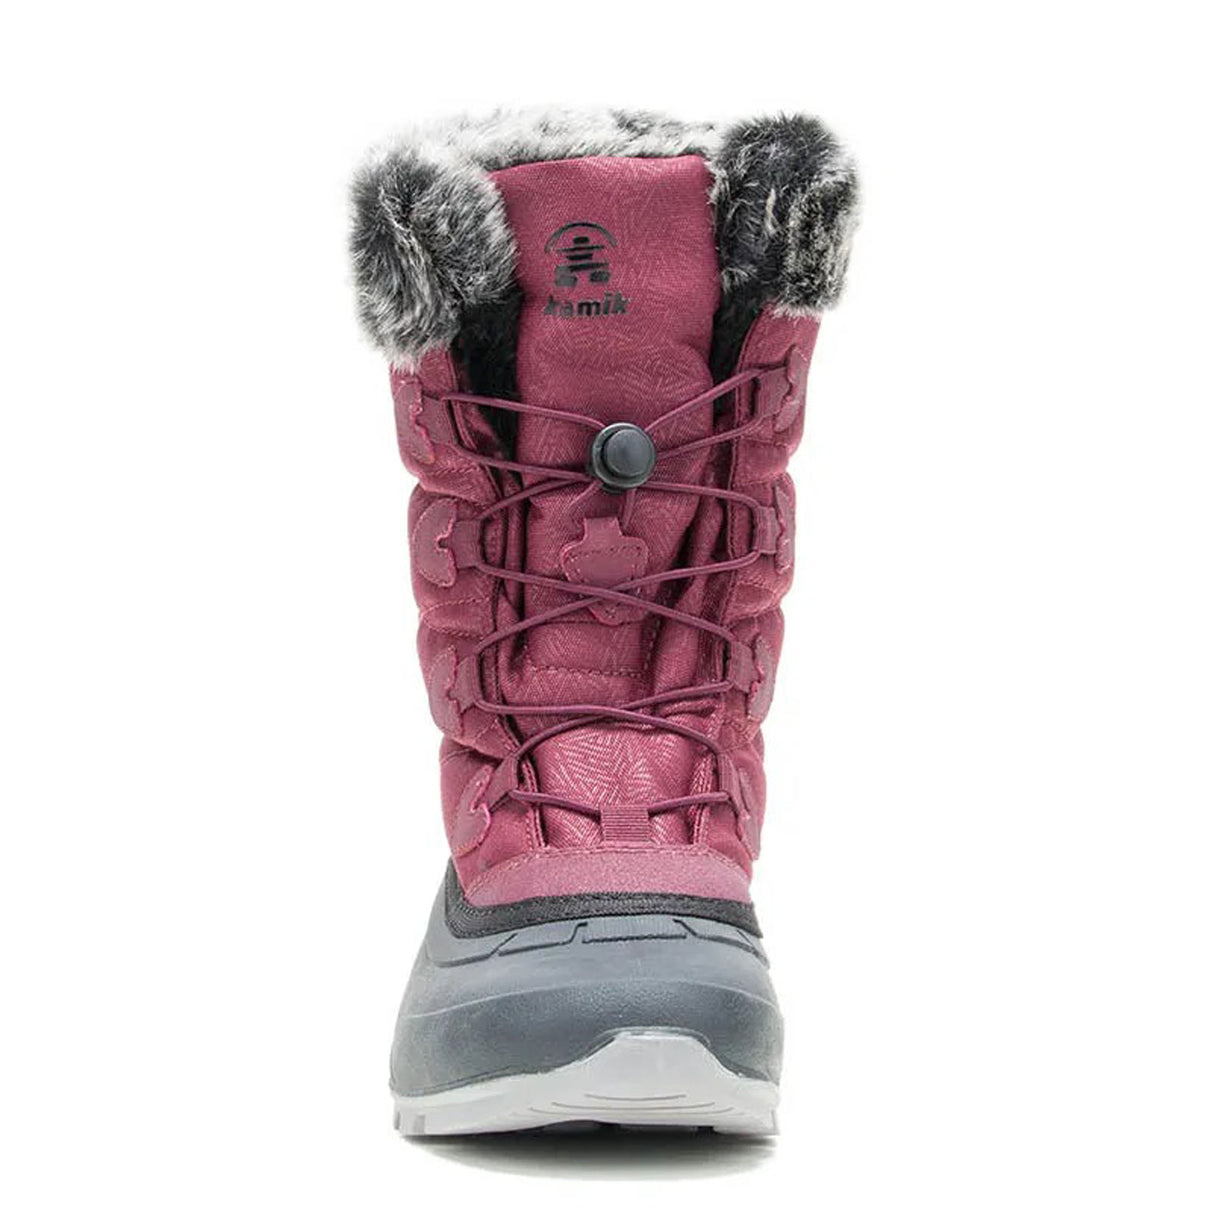 Kamik Momentum 3 Mid Winter Boot (Women) - Burgundy Boots - Winter - High - The Heel Shoe Fitters